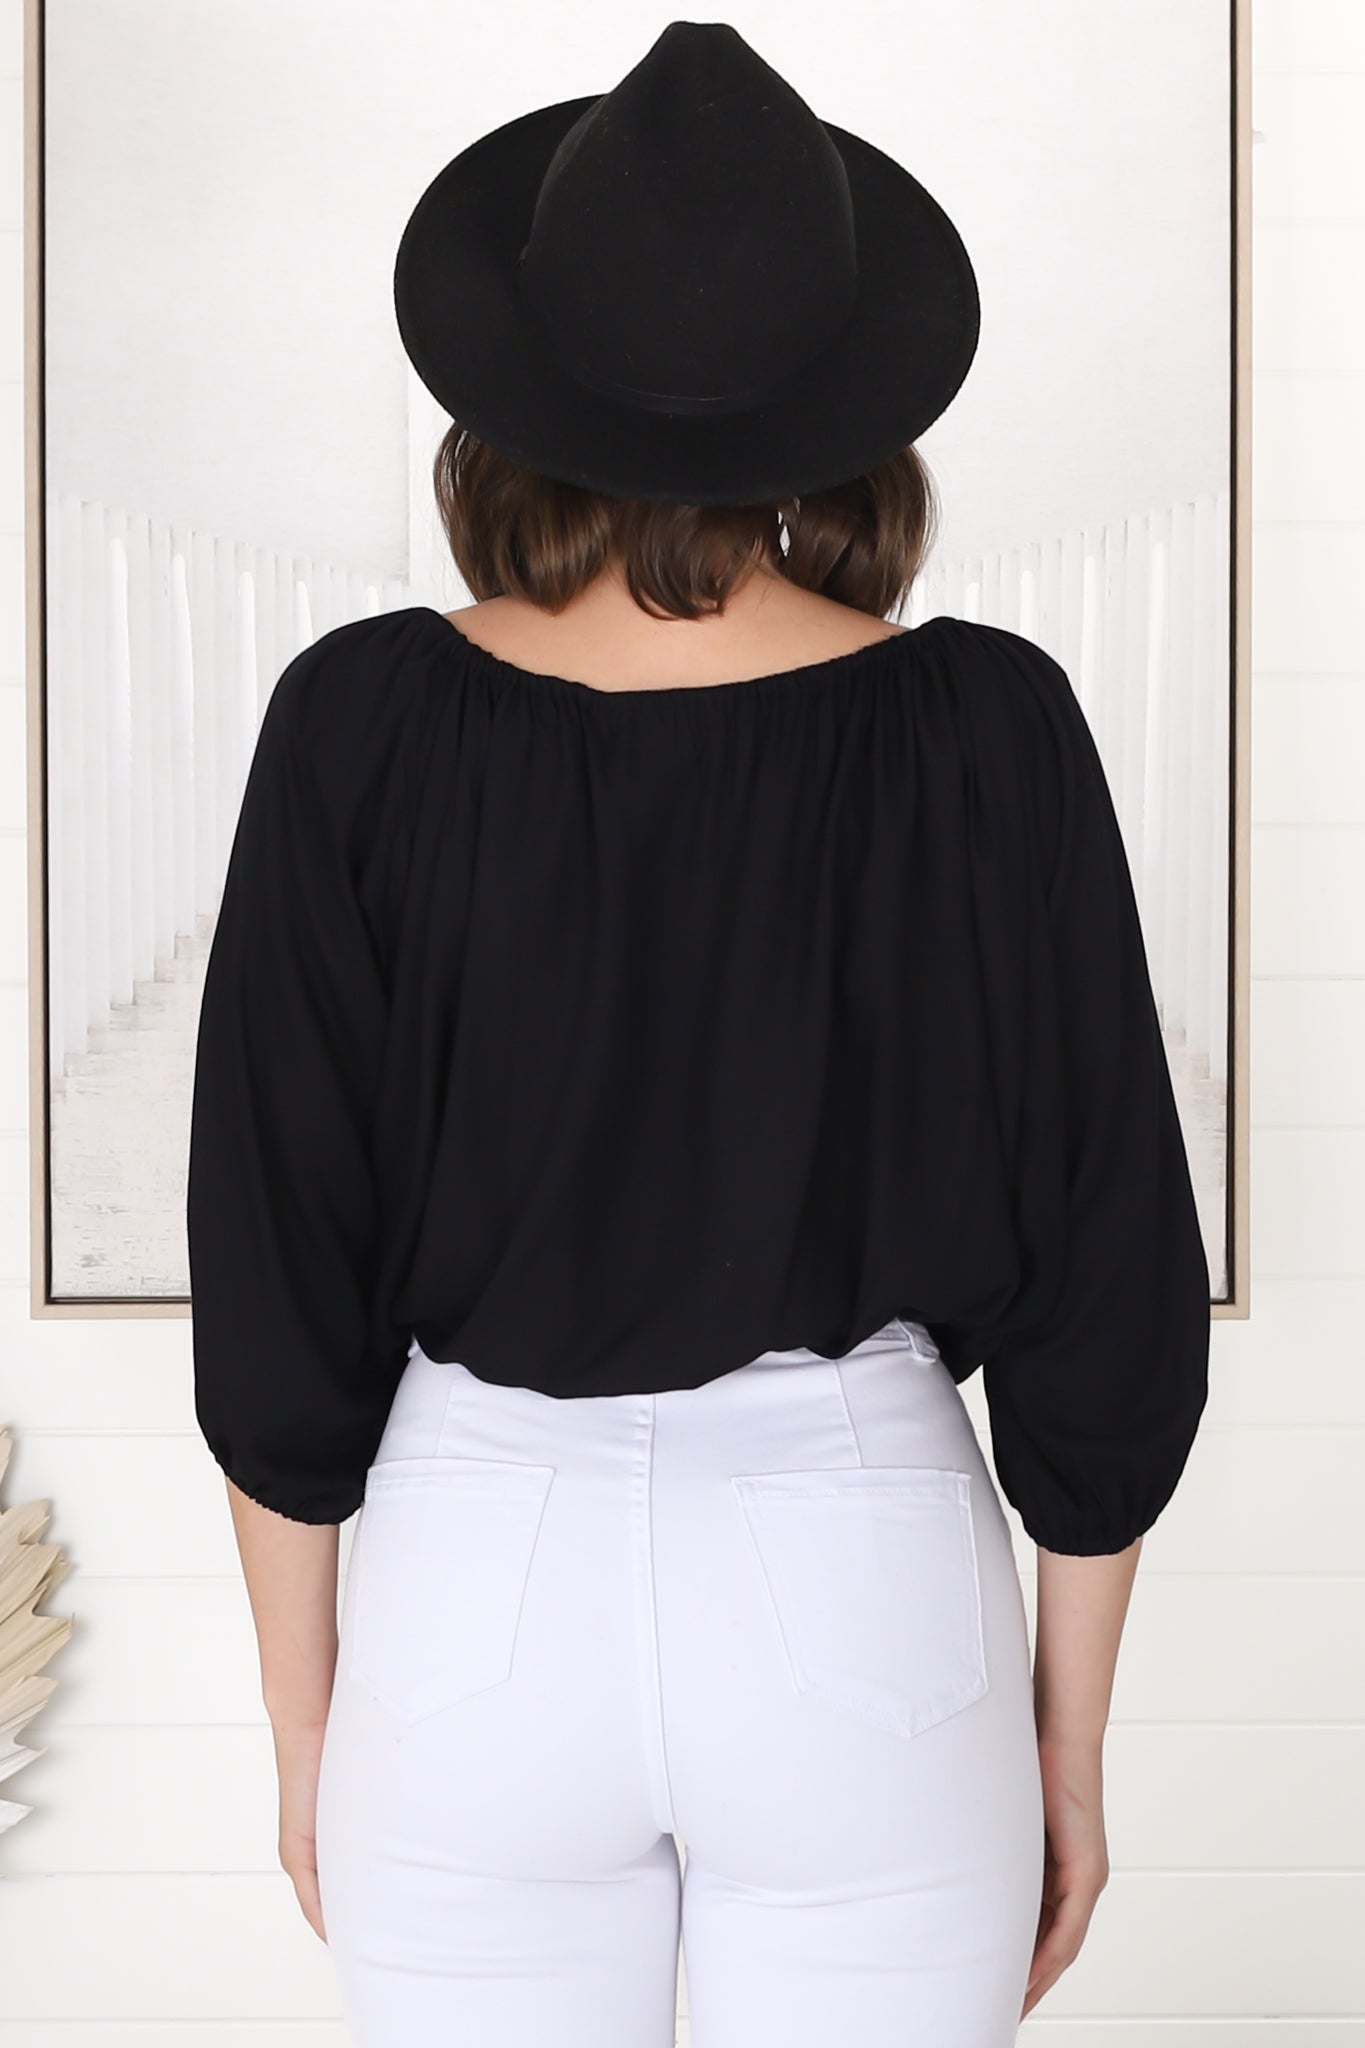 Thelma Top - Multiway Wear Pull In Neckline and Hemline Top in Black